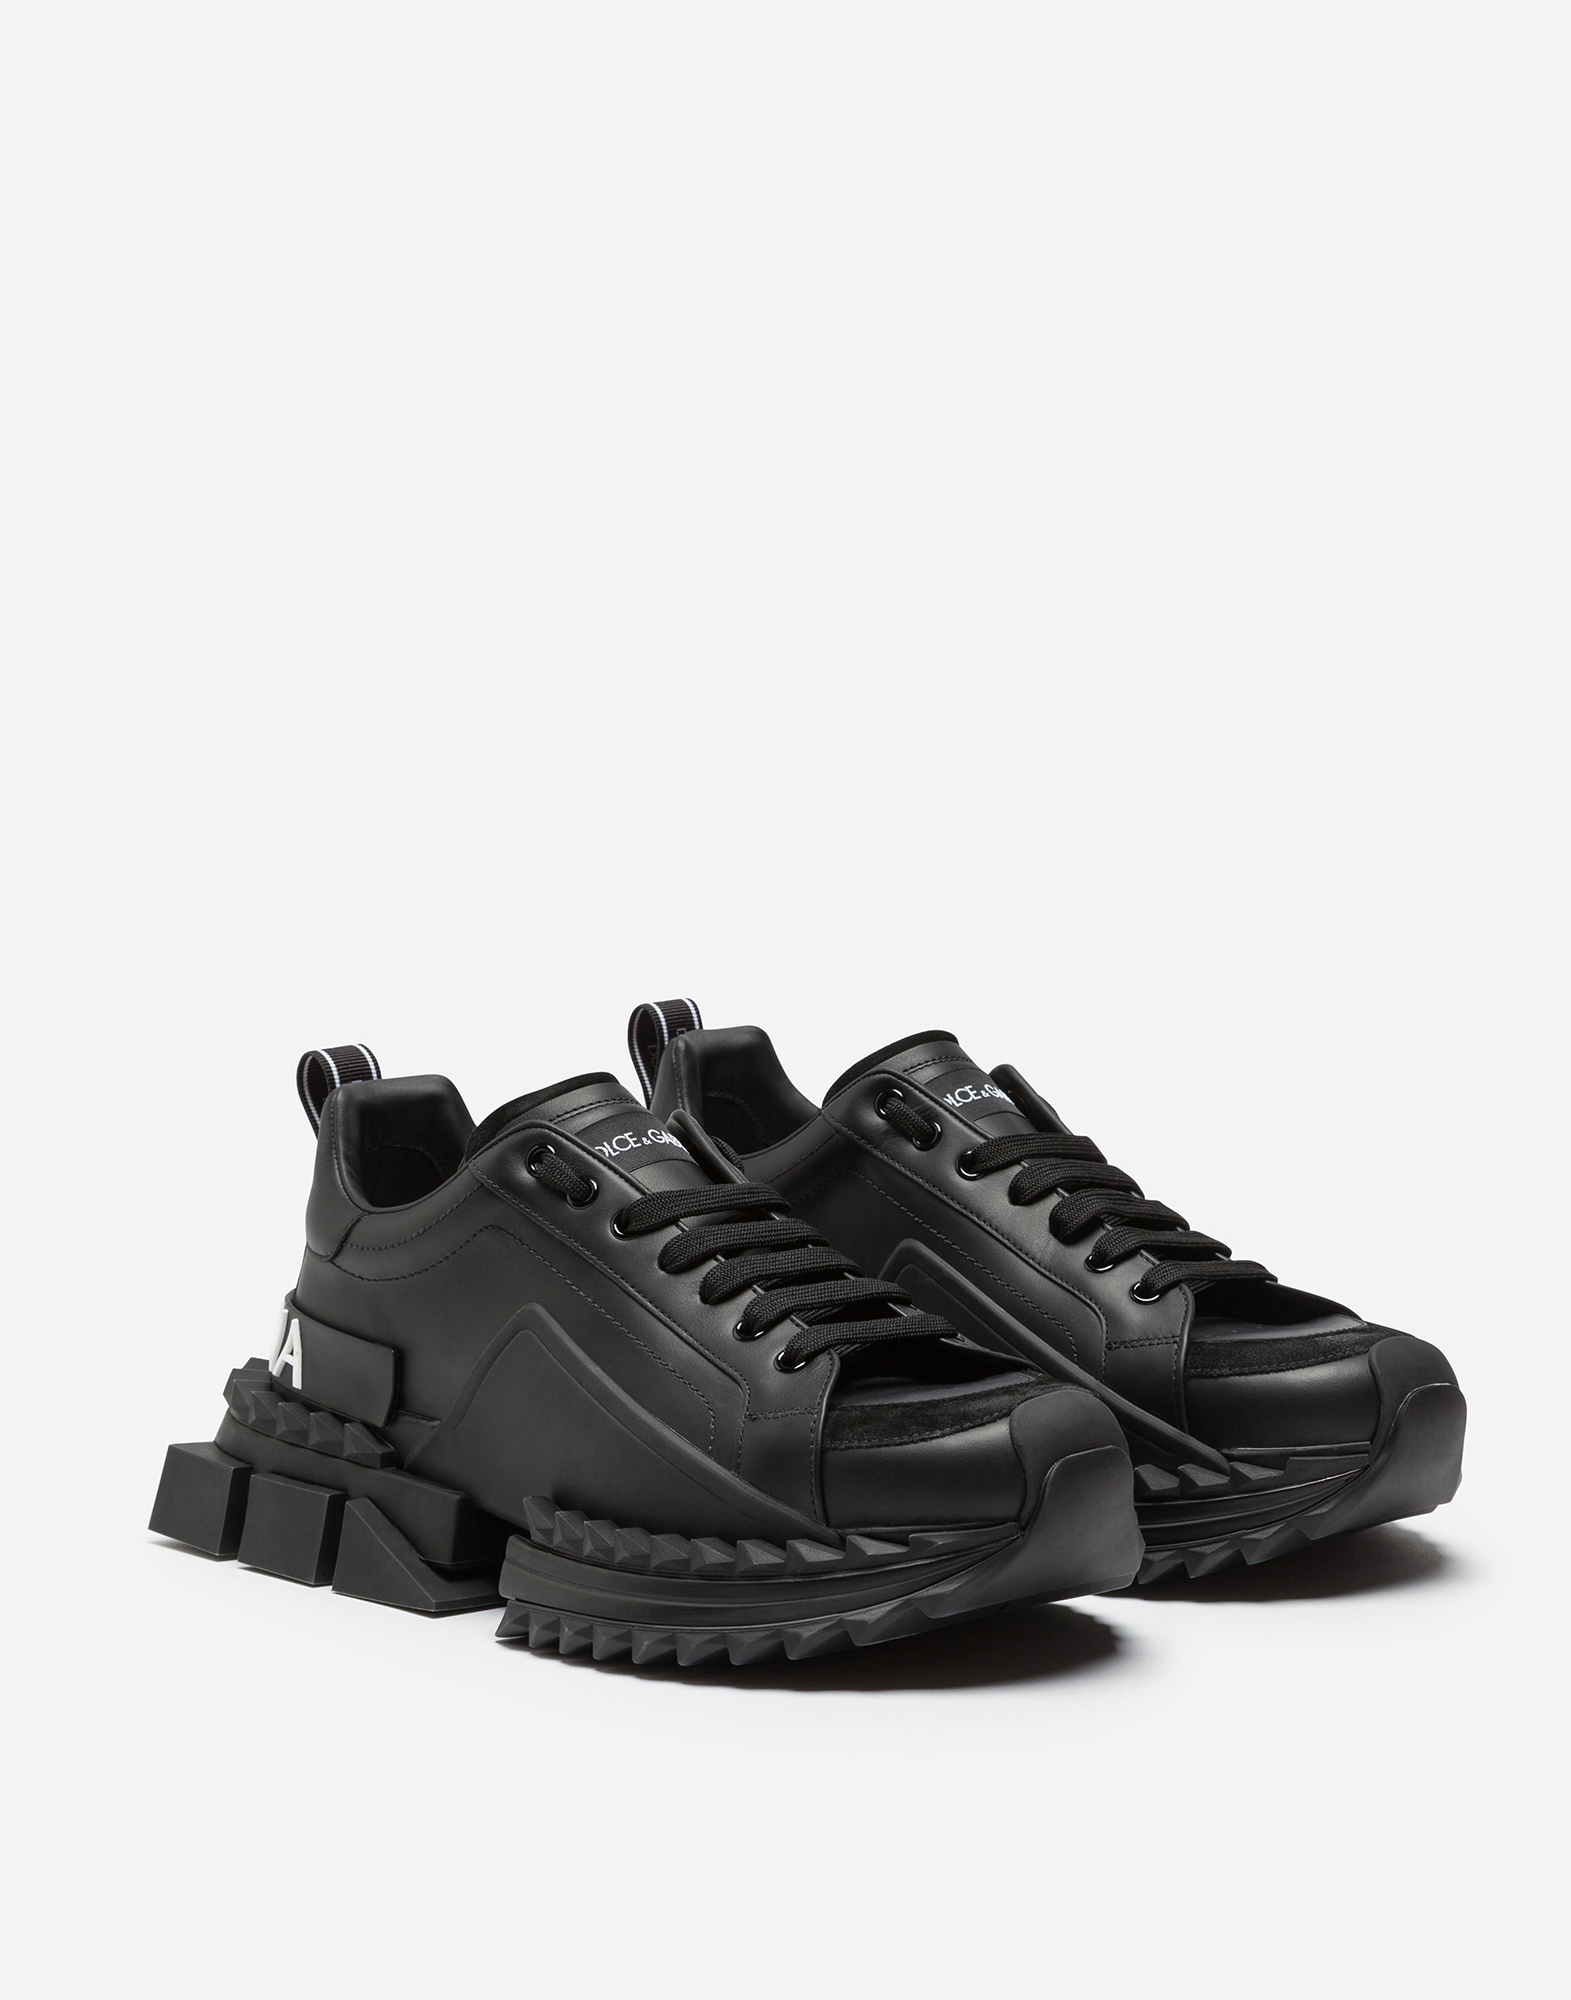 dolce gabbana black sneakers